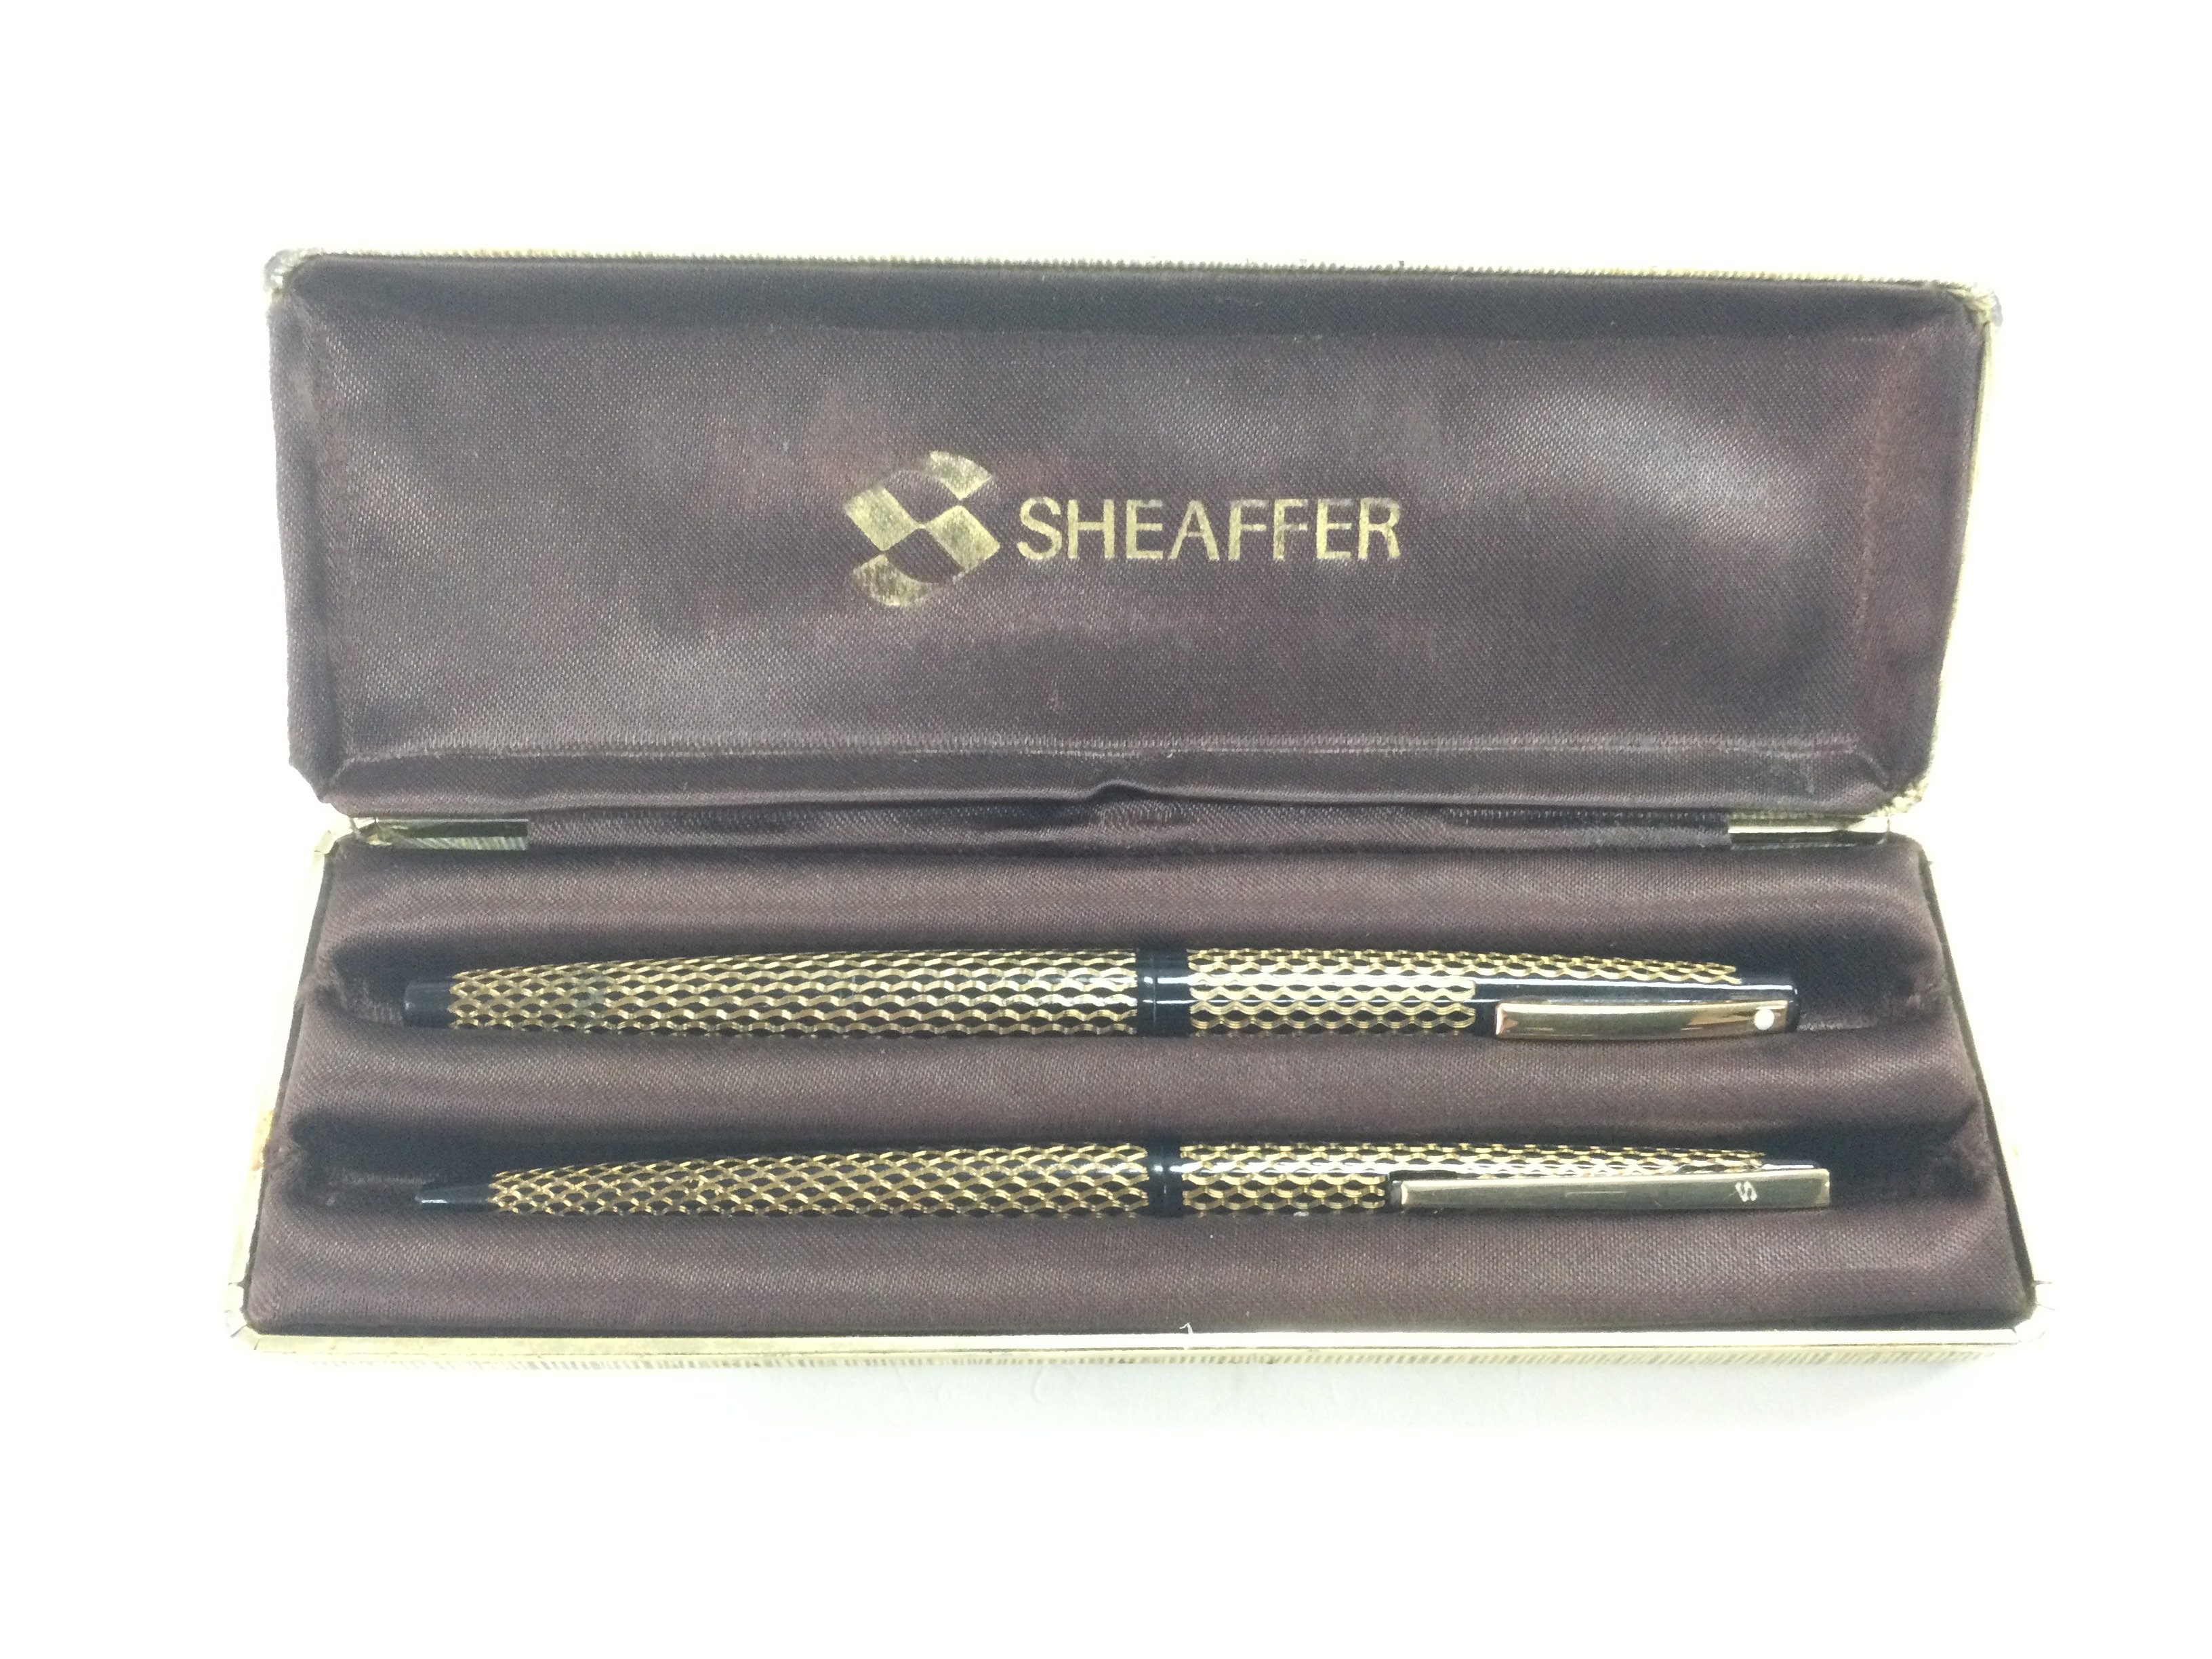 A cased Sheaffer pen set with 14k gold nib. Shippi